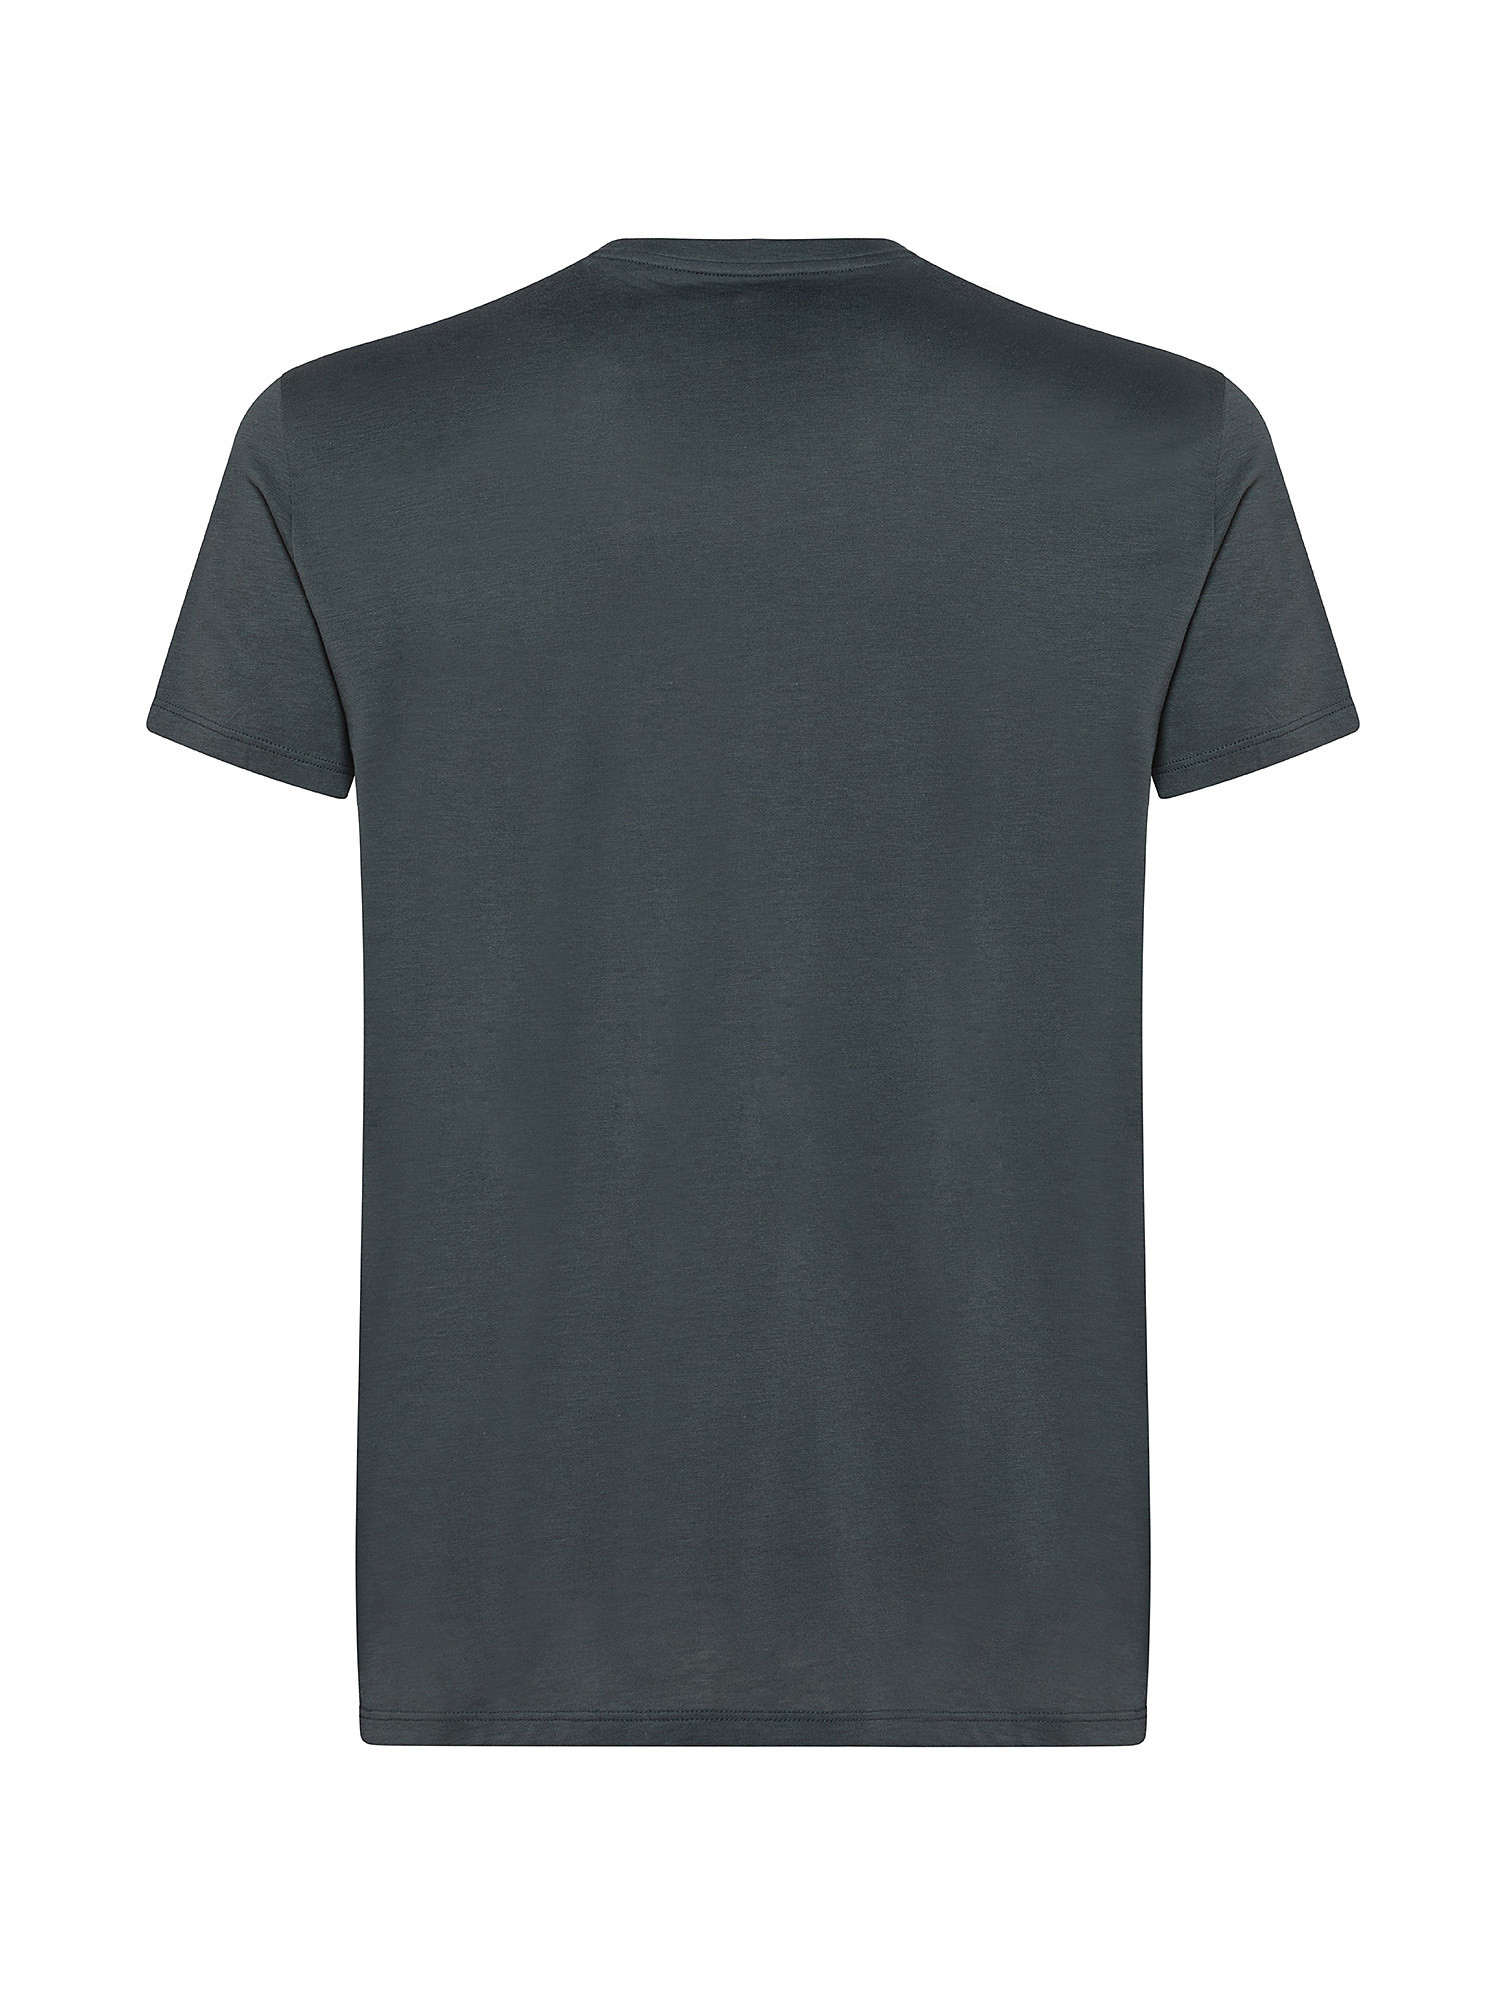 T-shirt, Dark Grey, large image number 1